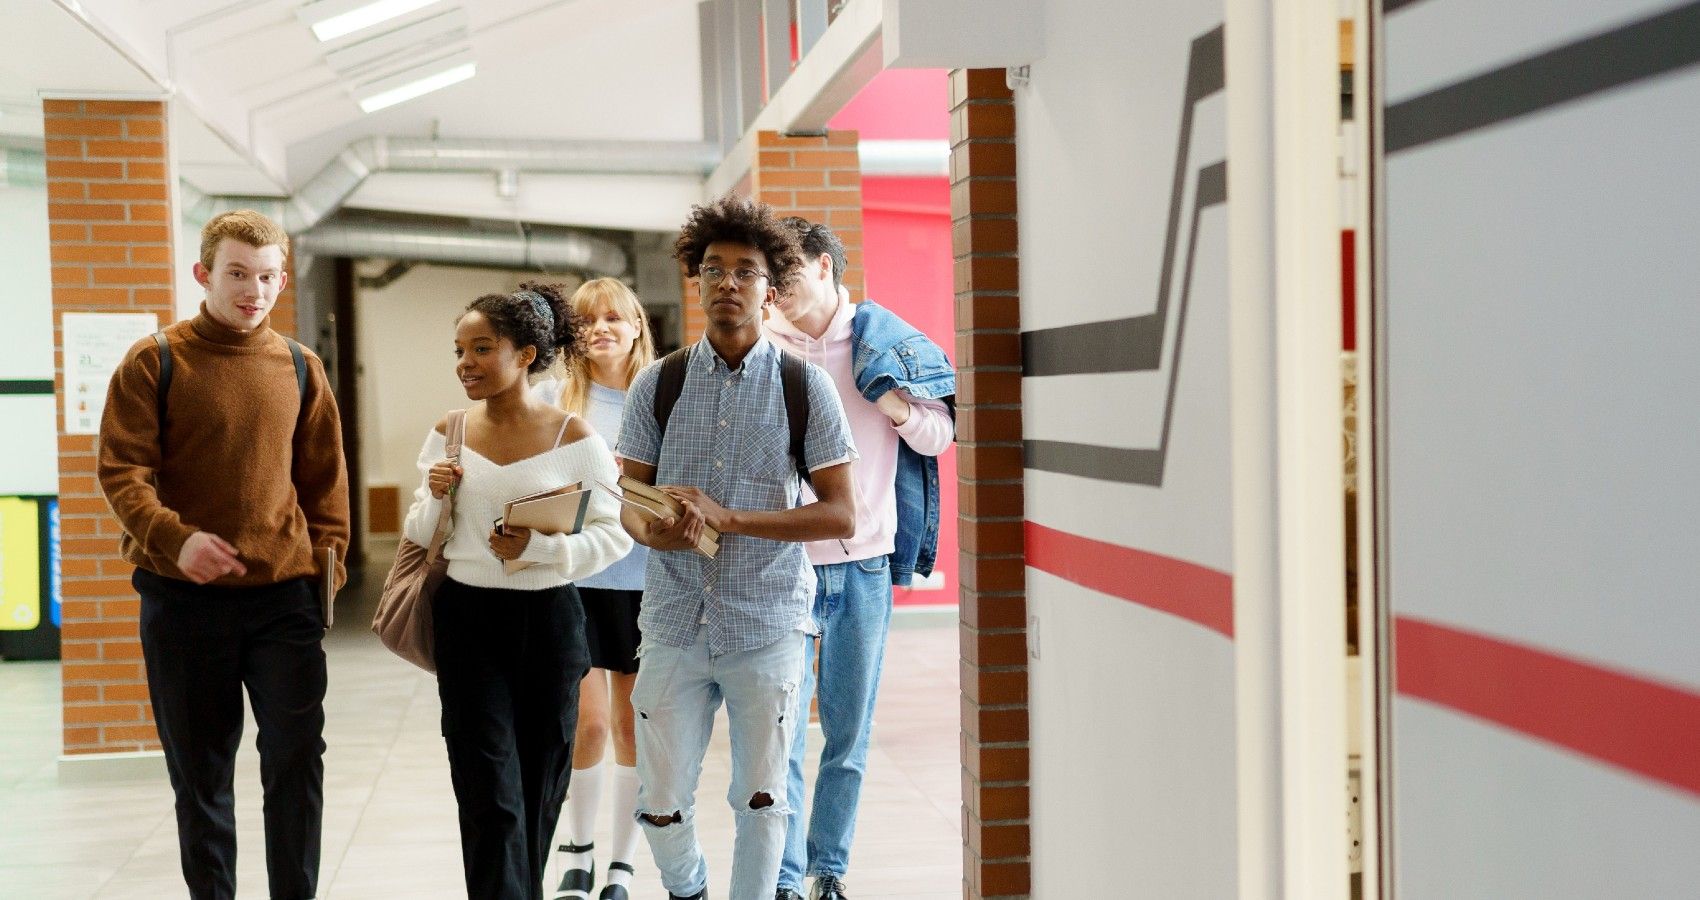 Teenagers walking through school hallway